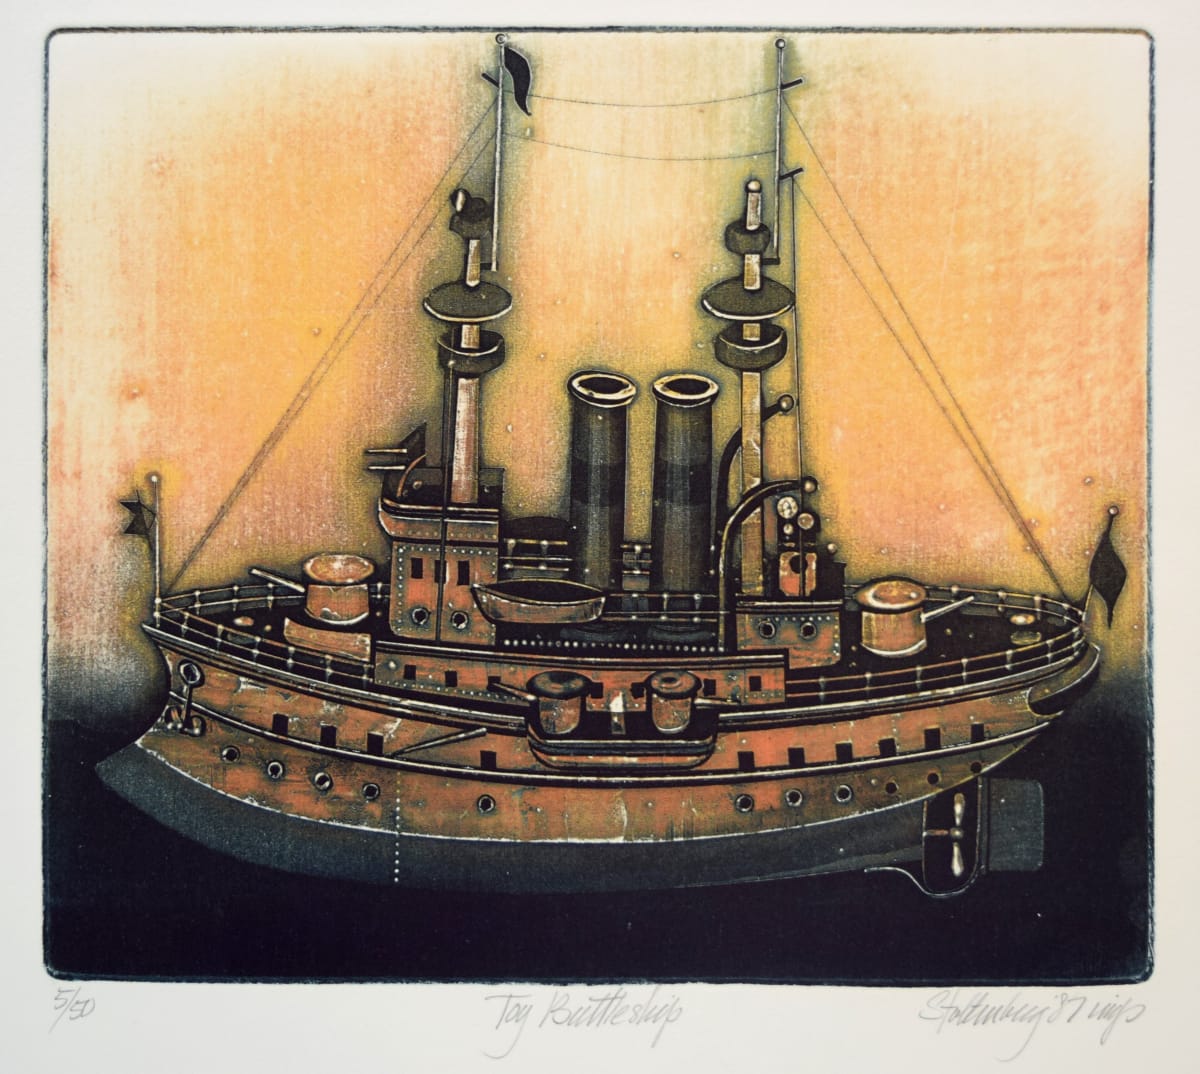 Toy Battleship (6) by Donald Stoltenberg  Image: Toy Battleship by Donald Stoltenberg